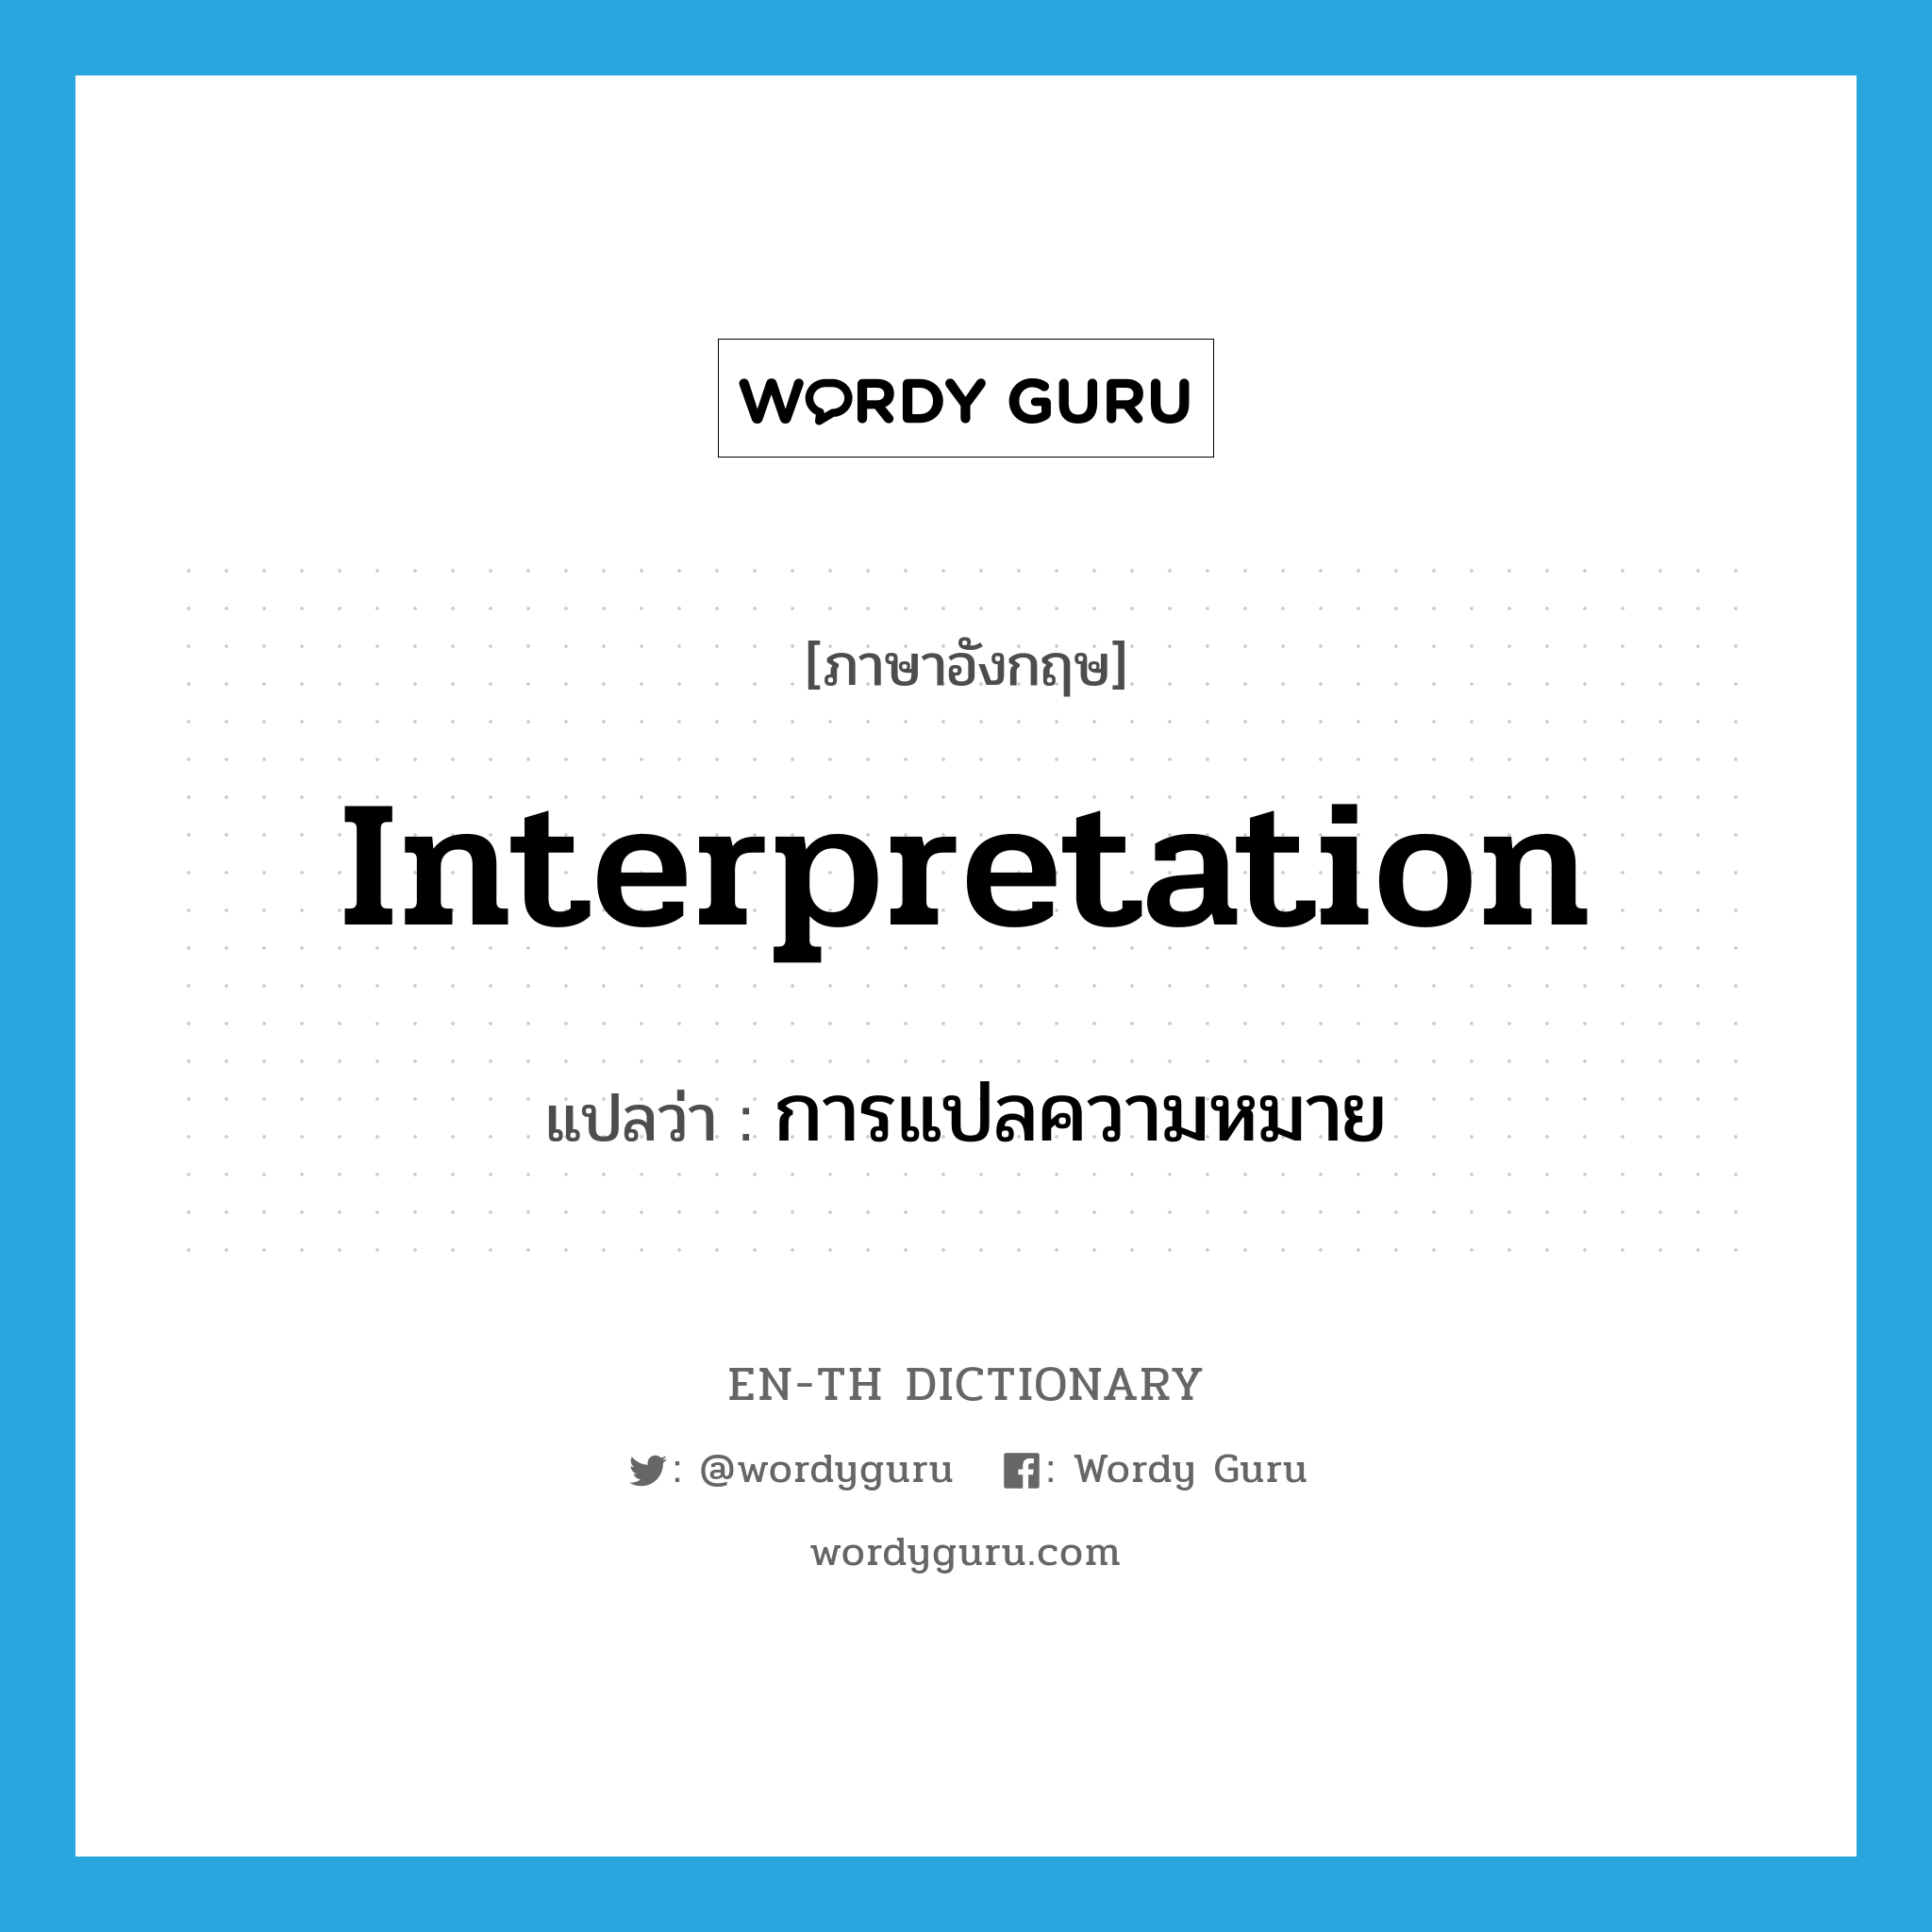 interpretation